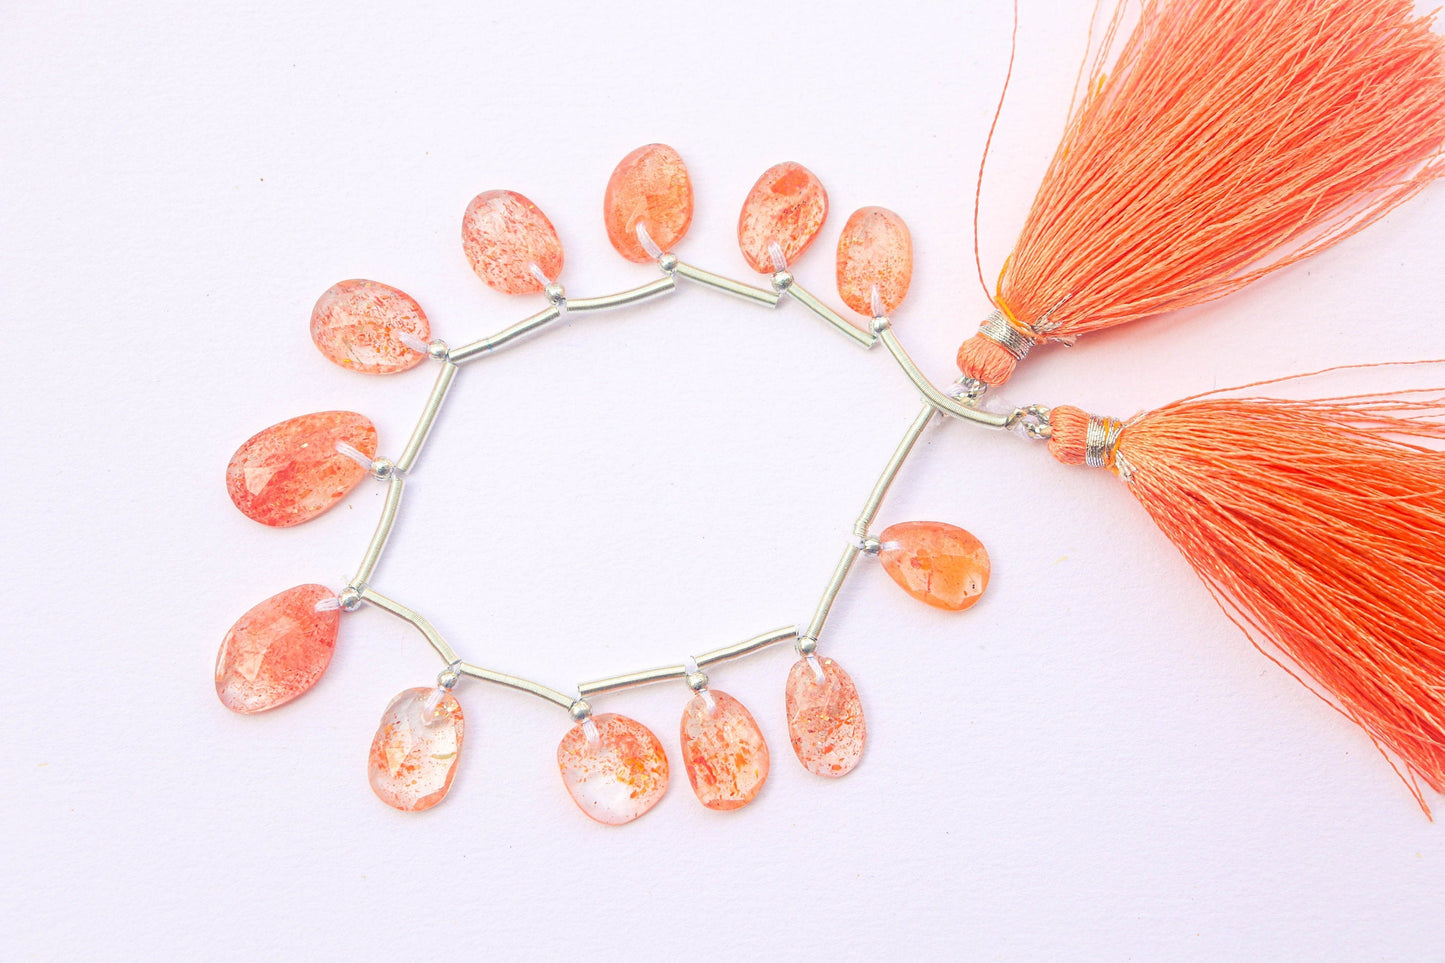 Sunstone Faceted Uneven Shape Rose cut Briolette Beads | 12 Pieces | Natural Sunstone Gemstone Beads | Beadsforyourjewelry BFYJ1197-4 Beadsforyourjewelry